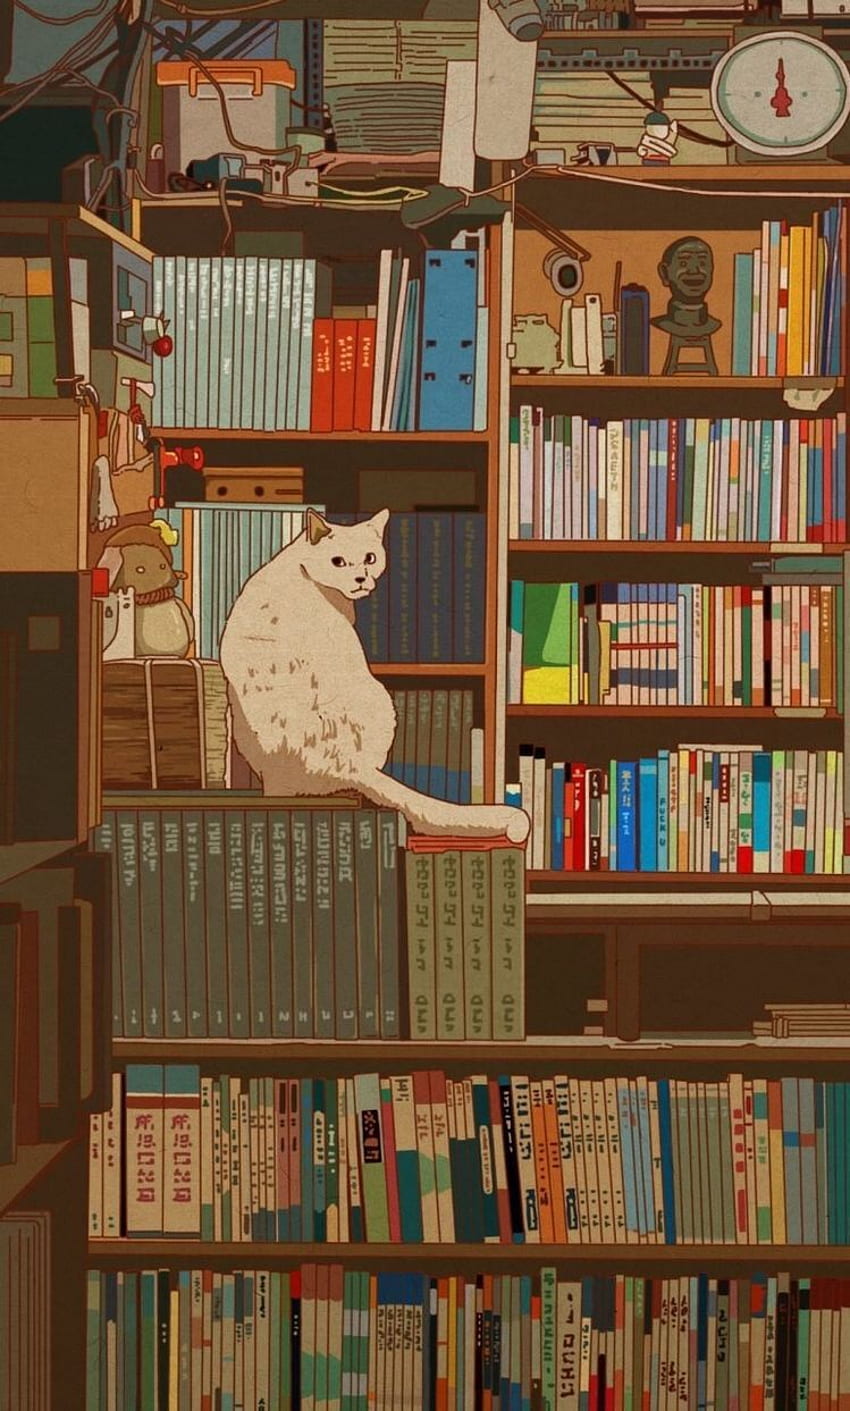 A cat sitting on a bookshelf - Books, cat, library